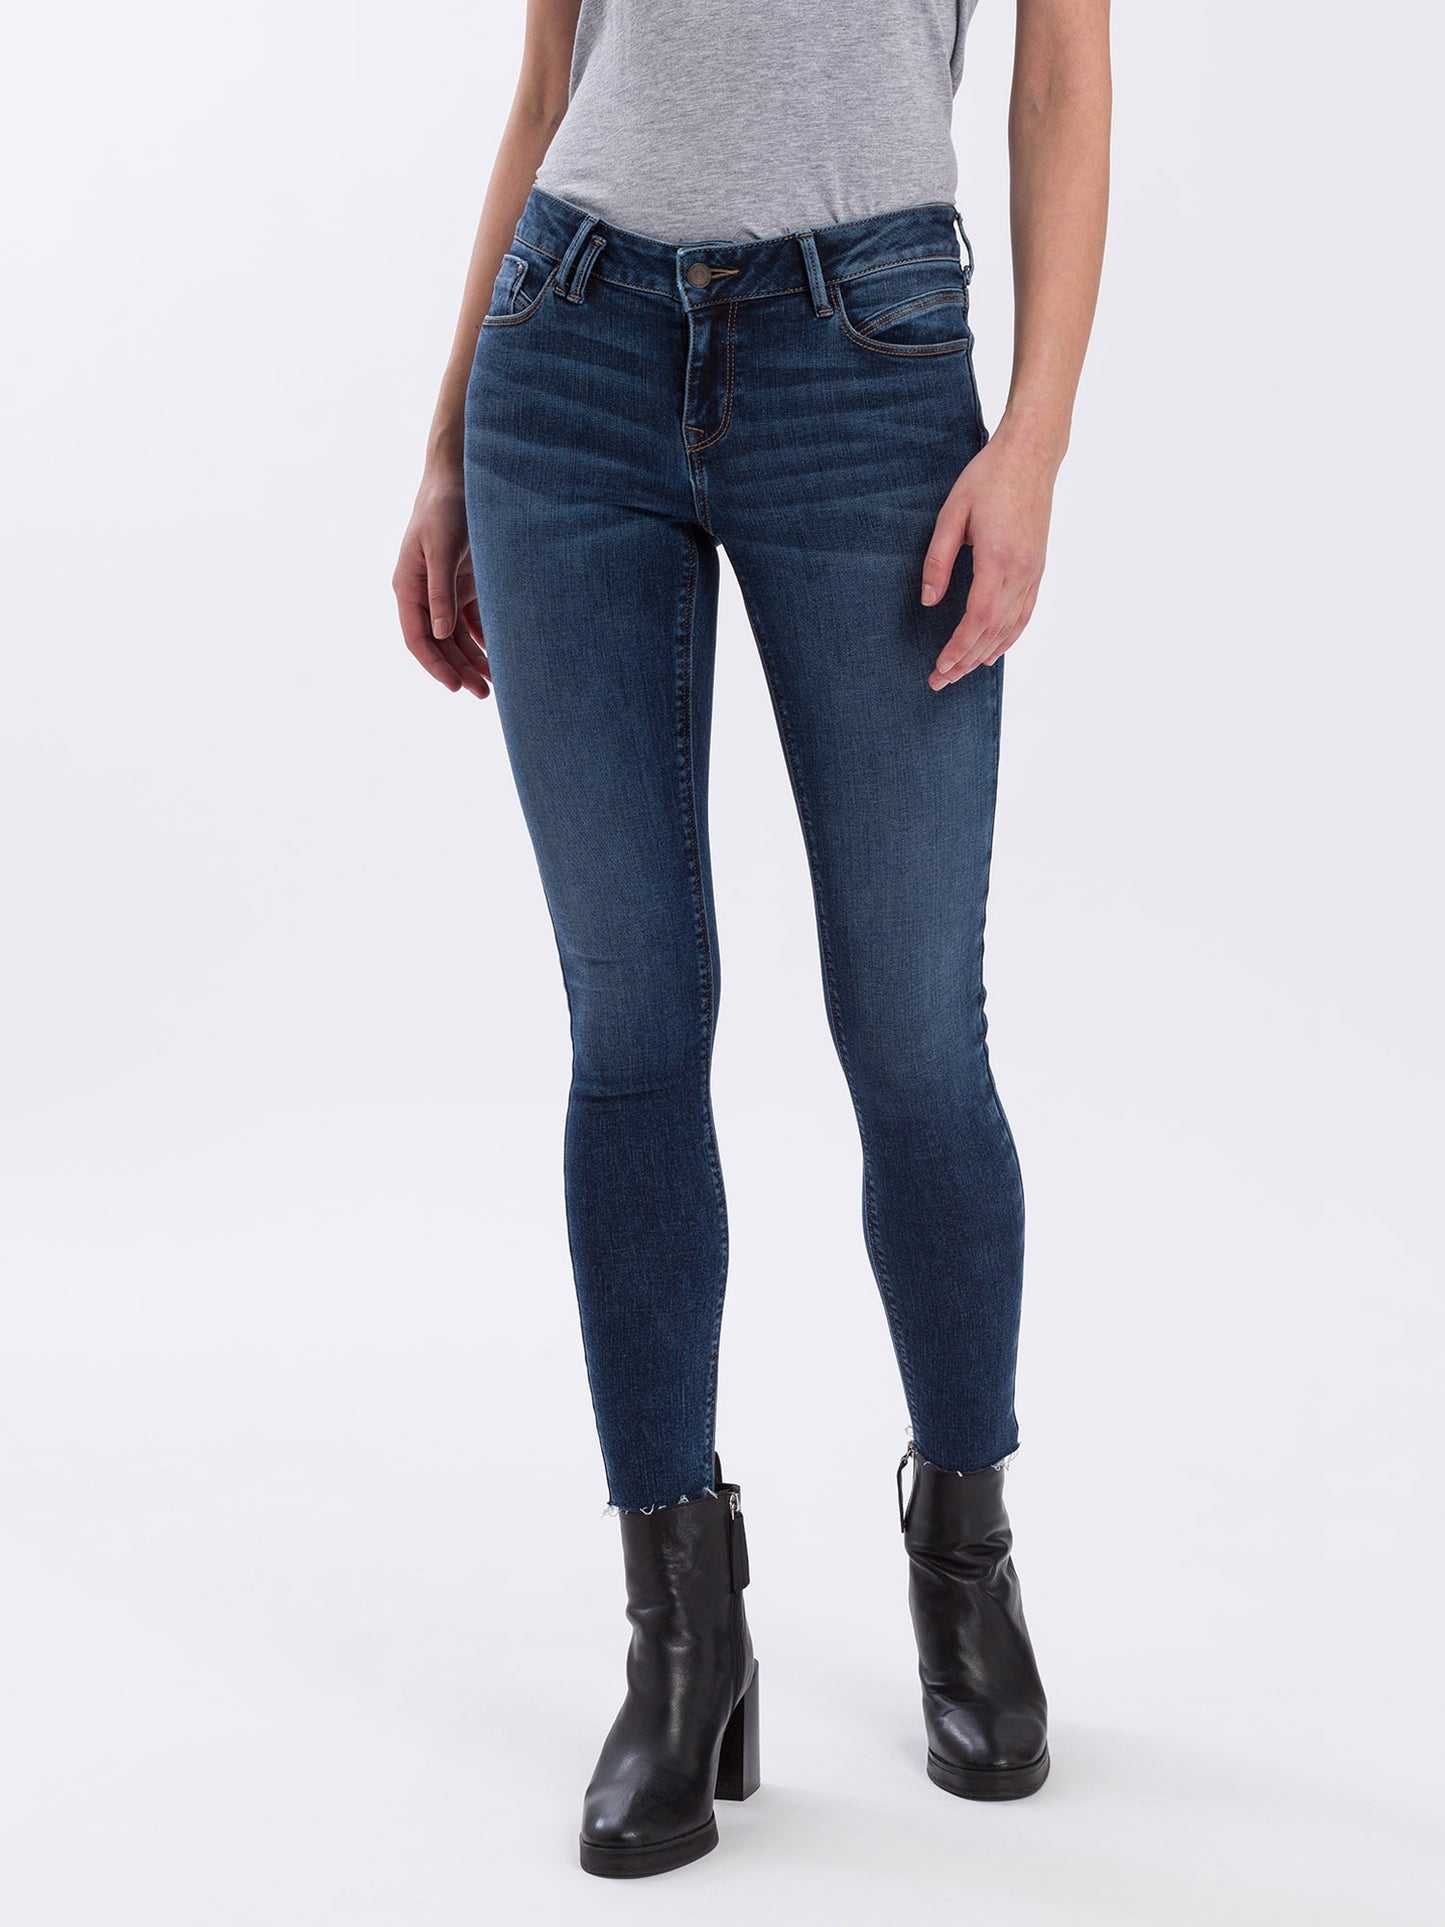 Giselle Damen Jeans Super Skinny Fit Mid Waist Ankle Lenght mittelblau